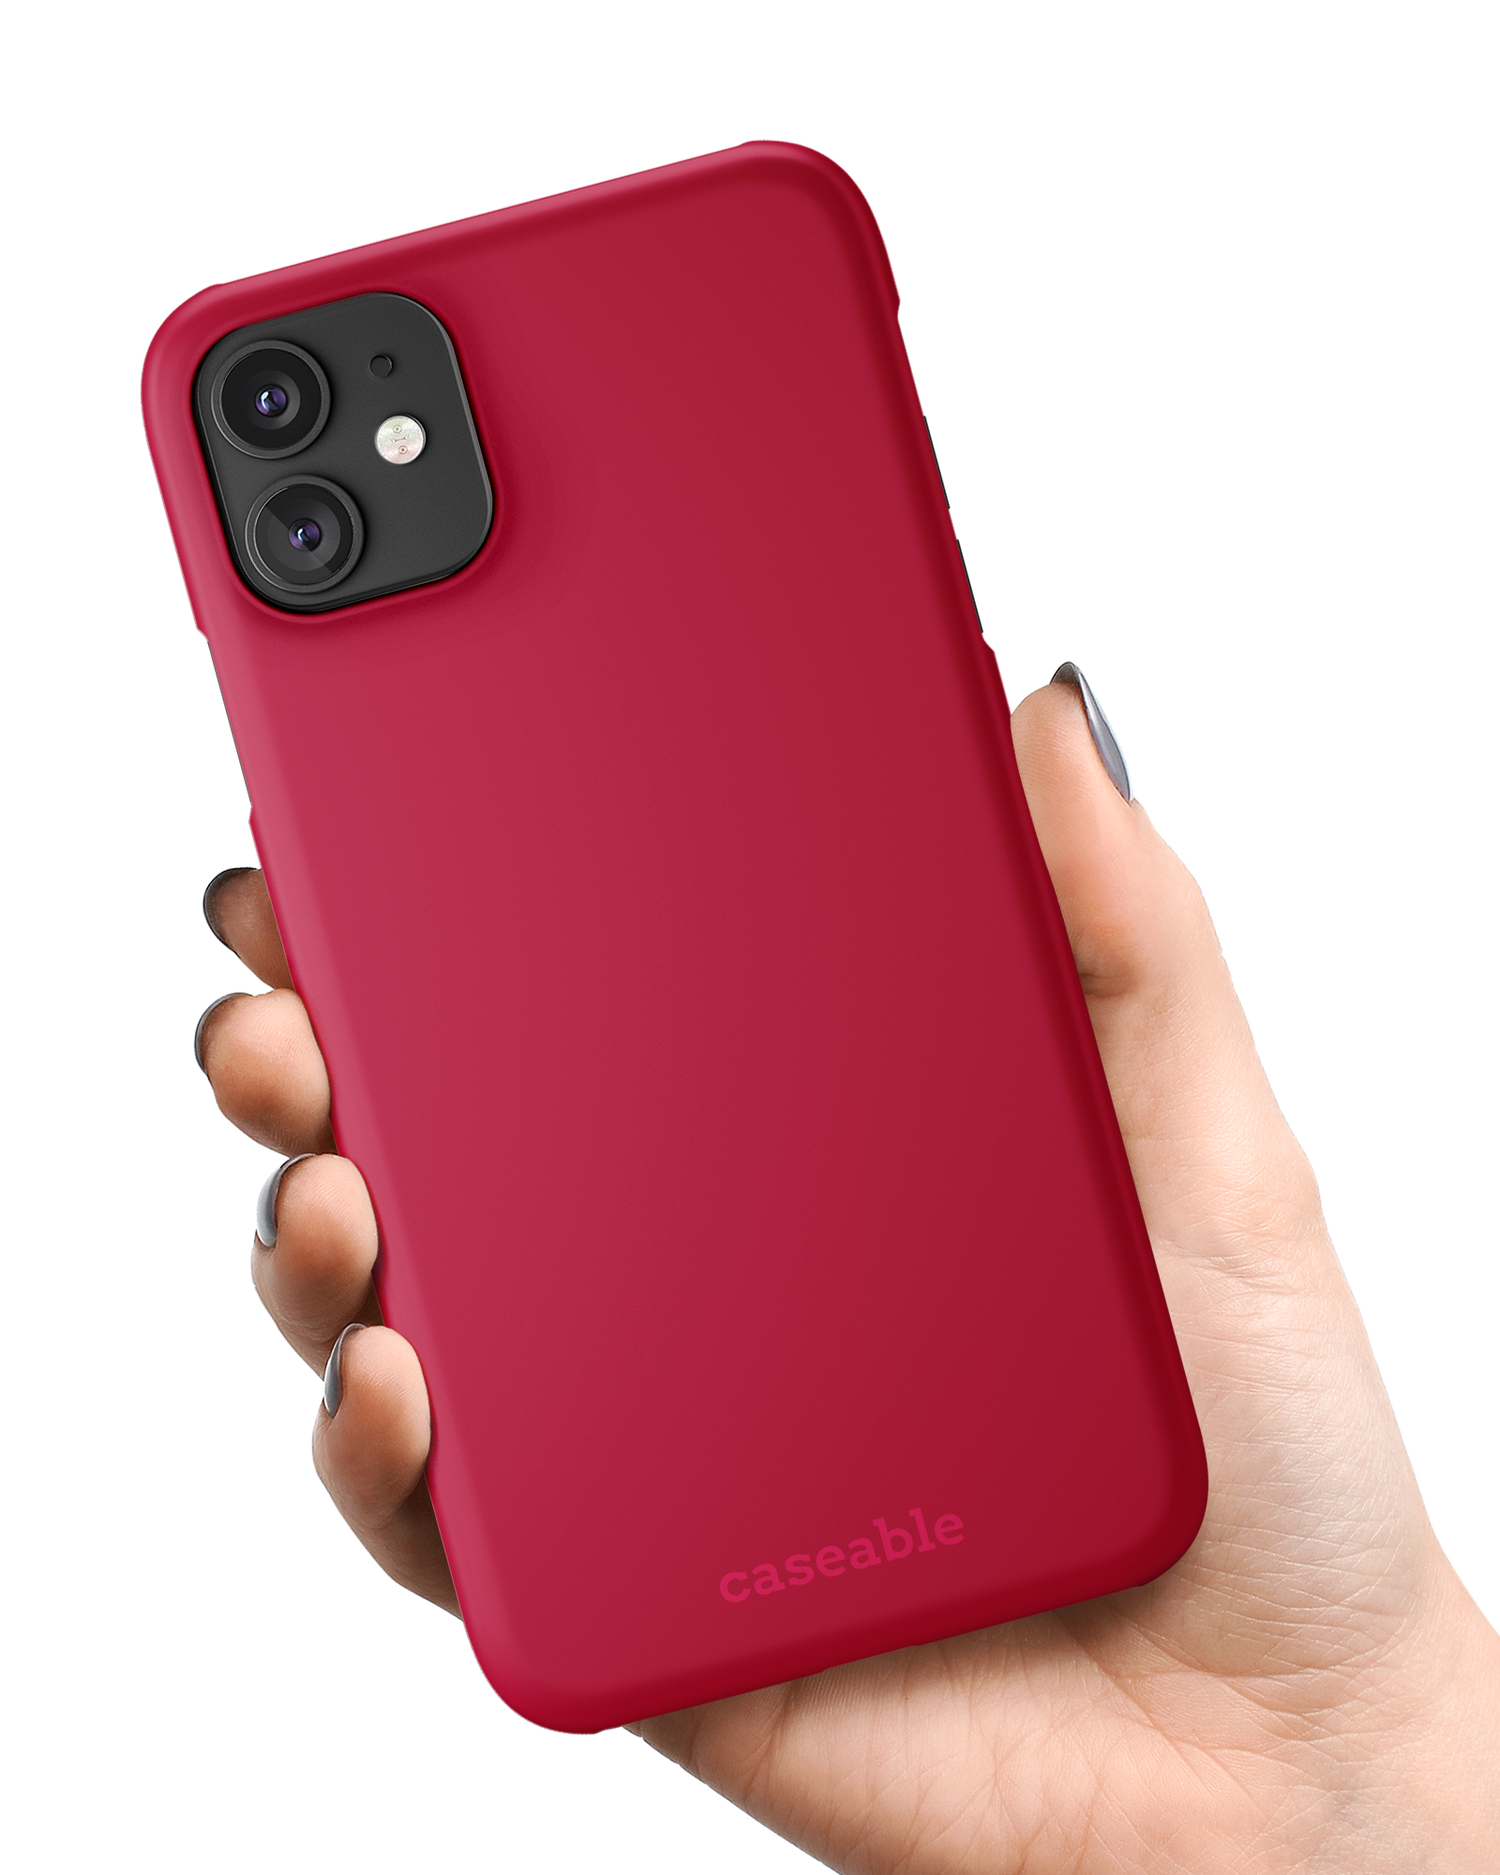 RED Hardcase Handyhülle Apple iPhone 11 in der Hand gehalten